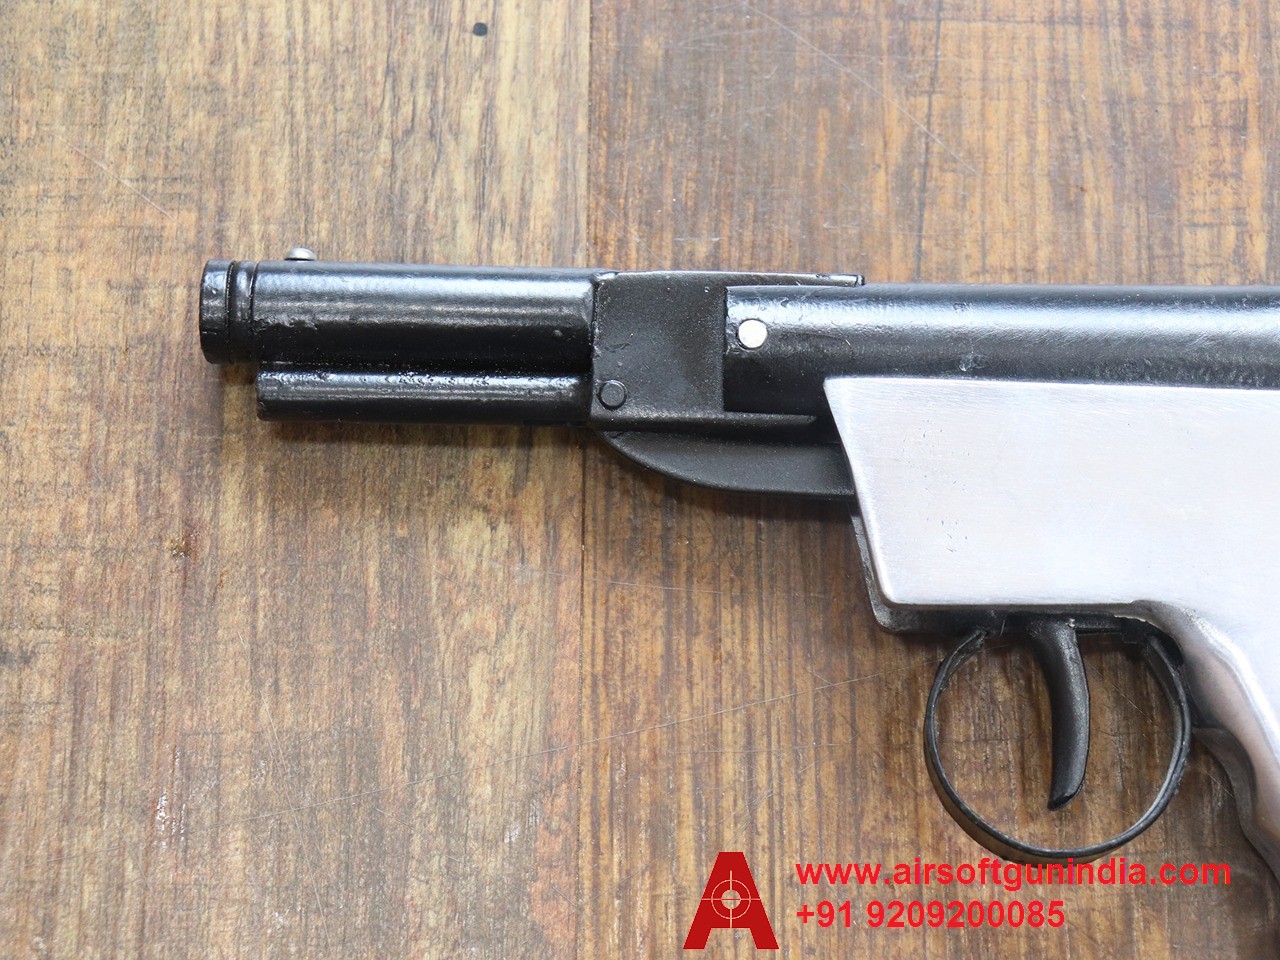 Bond Champion Silver Single-Shot .177 Caliber / 4.5 Mm Indian Air Pistol By Airsoft Gun India